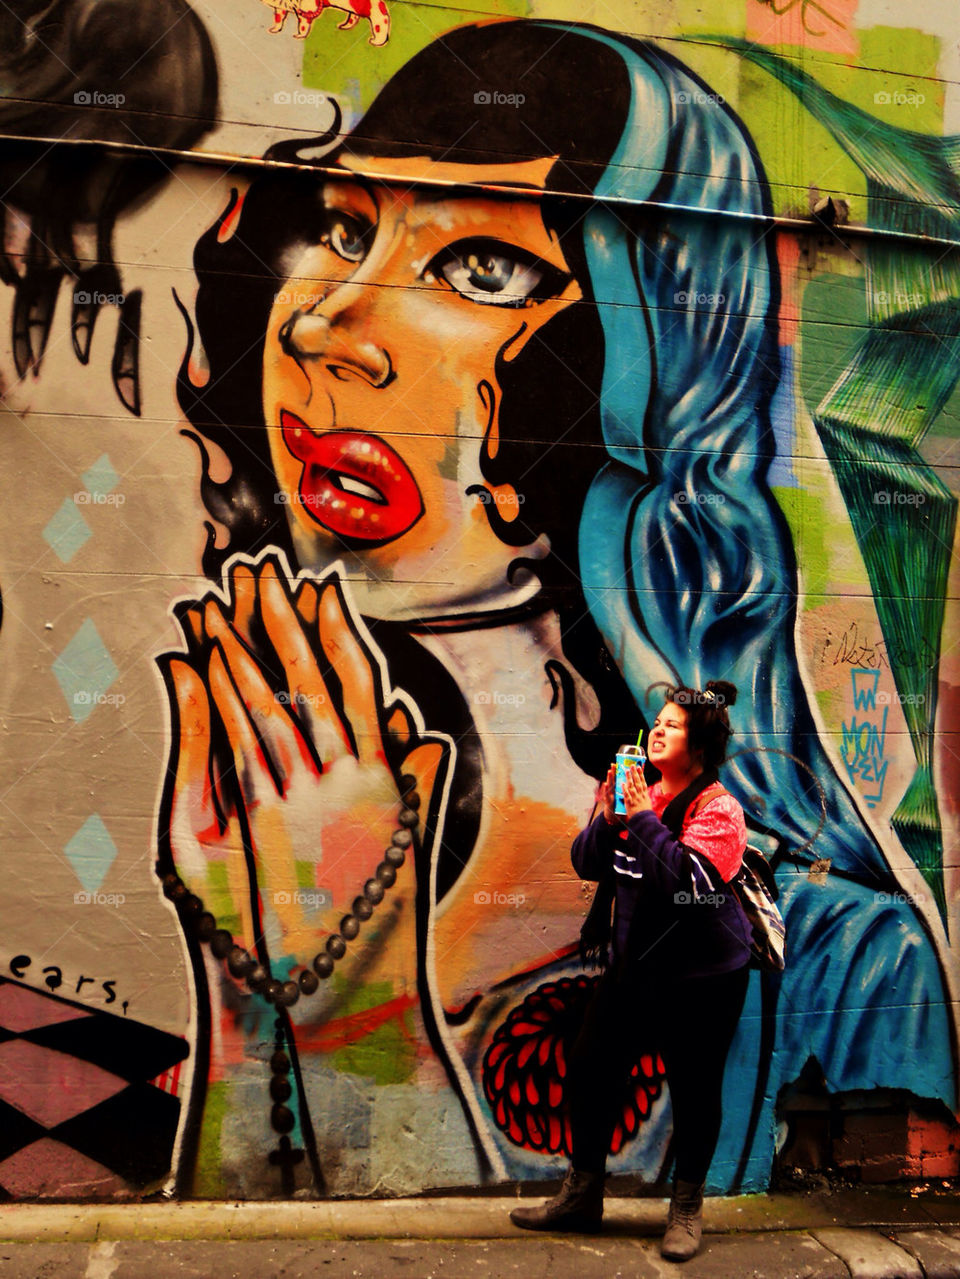 graffiti girl melbourne religious by jenko_1996